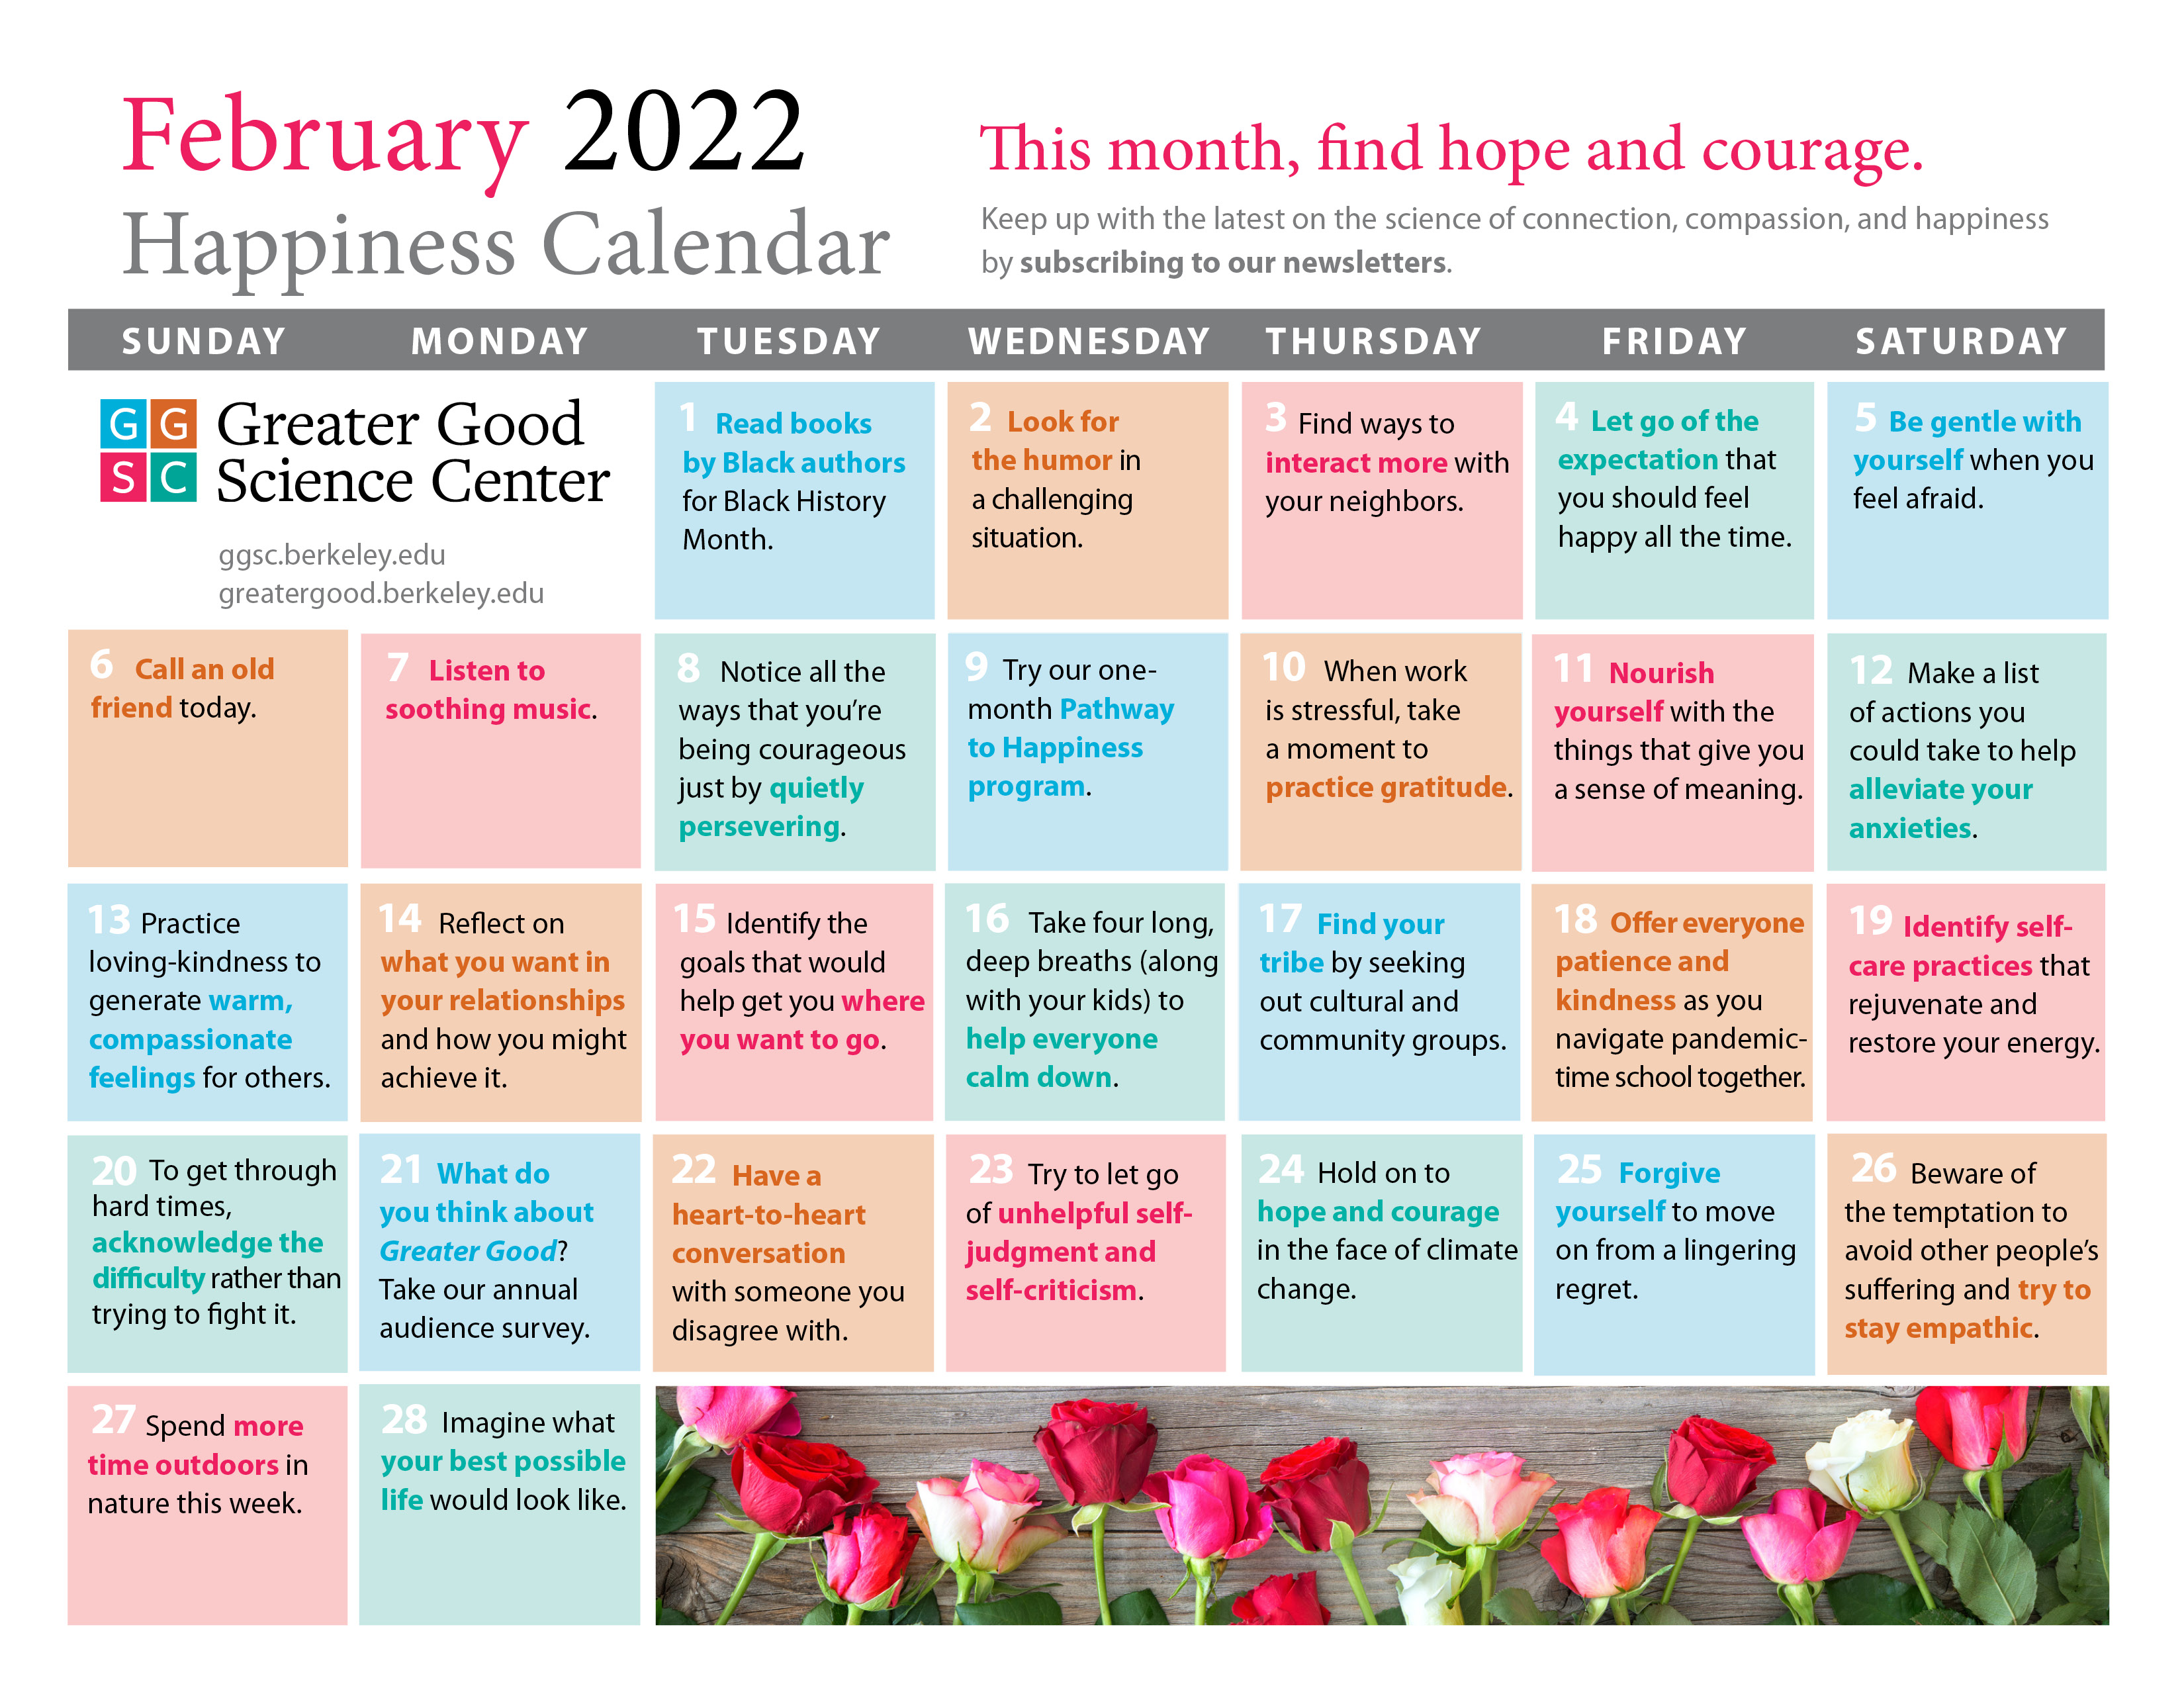 February 2022 happiness calendar